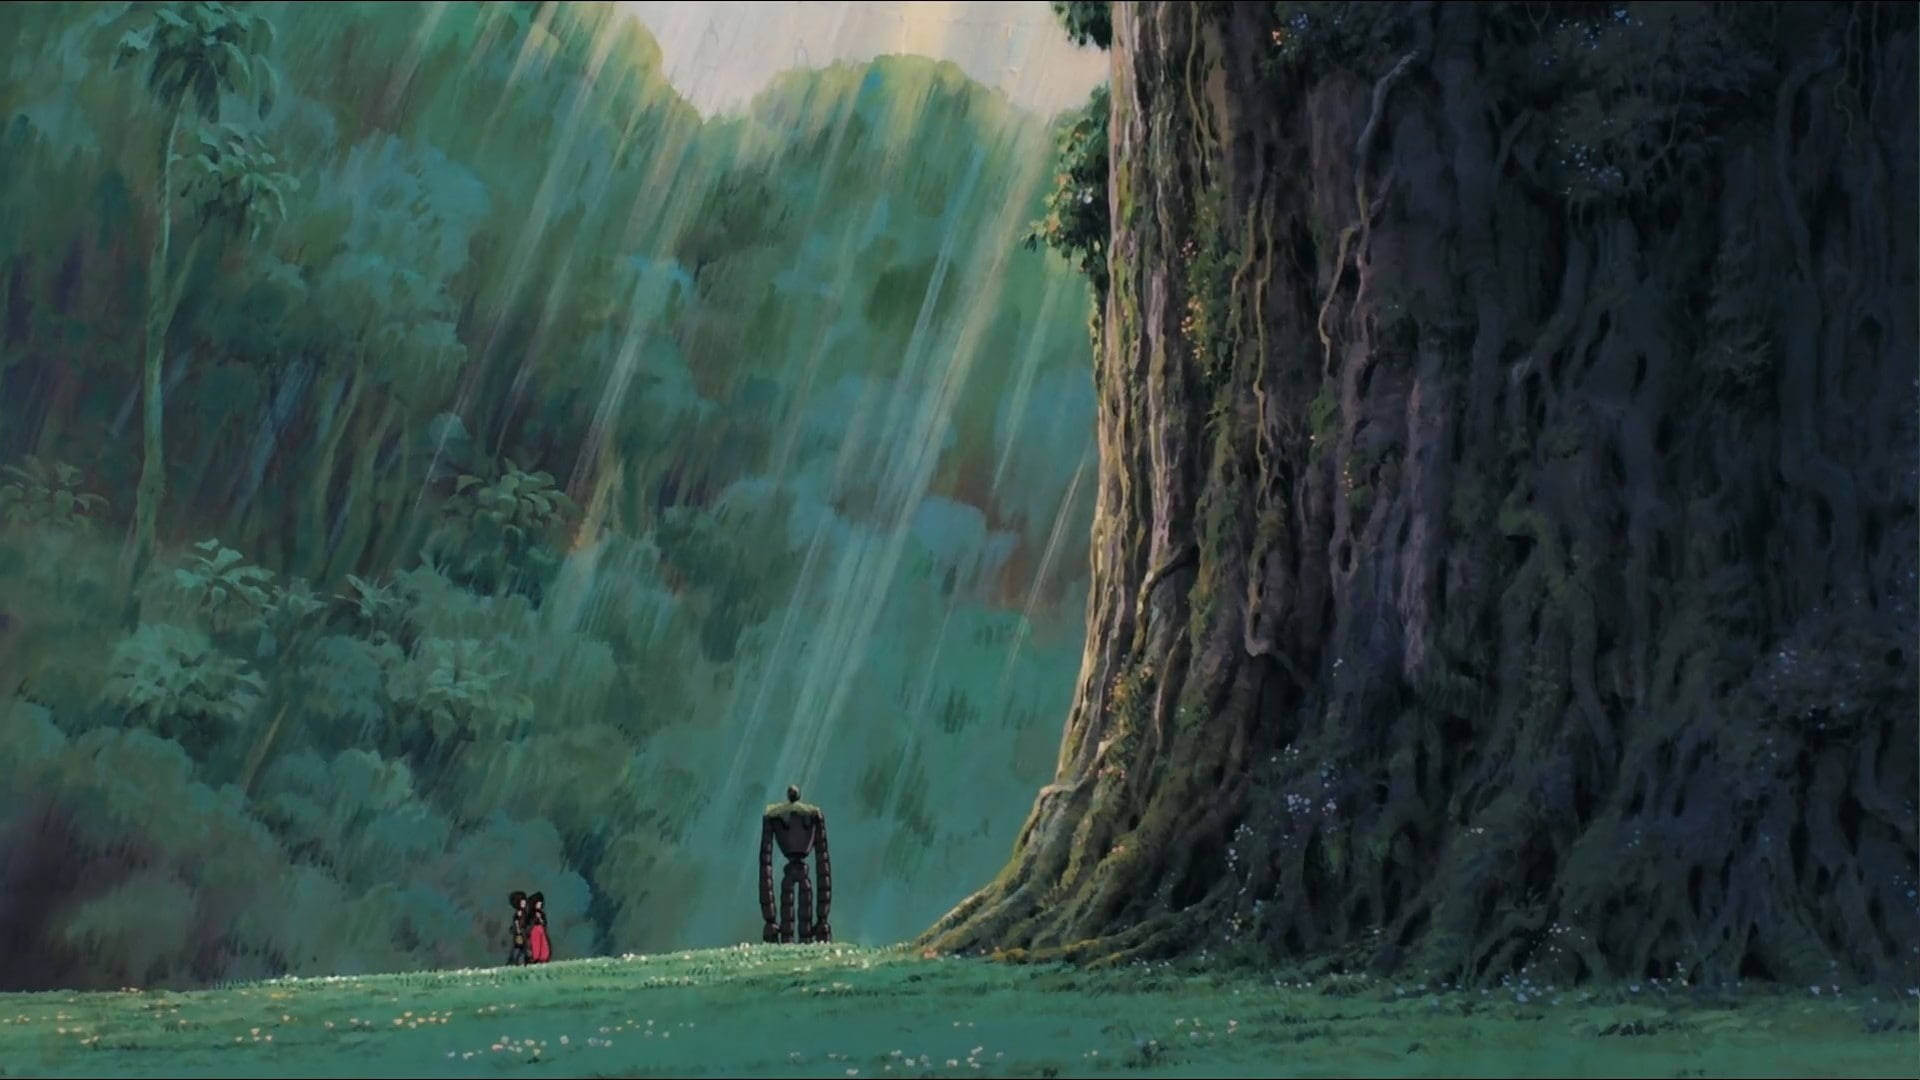 Studio Ghibli Scenery Robot In Forest